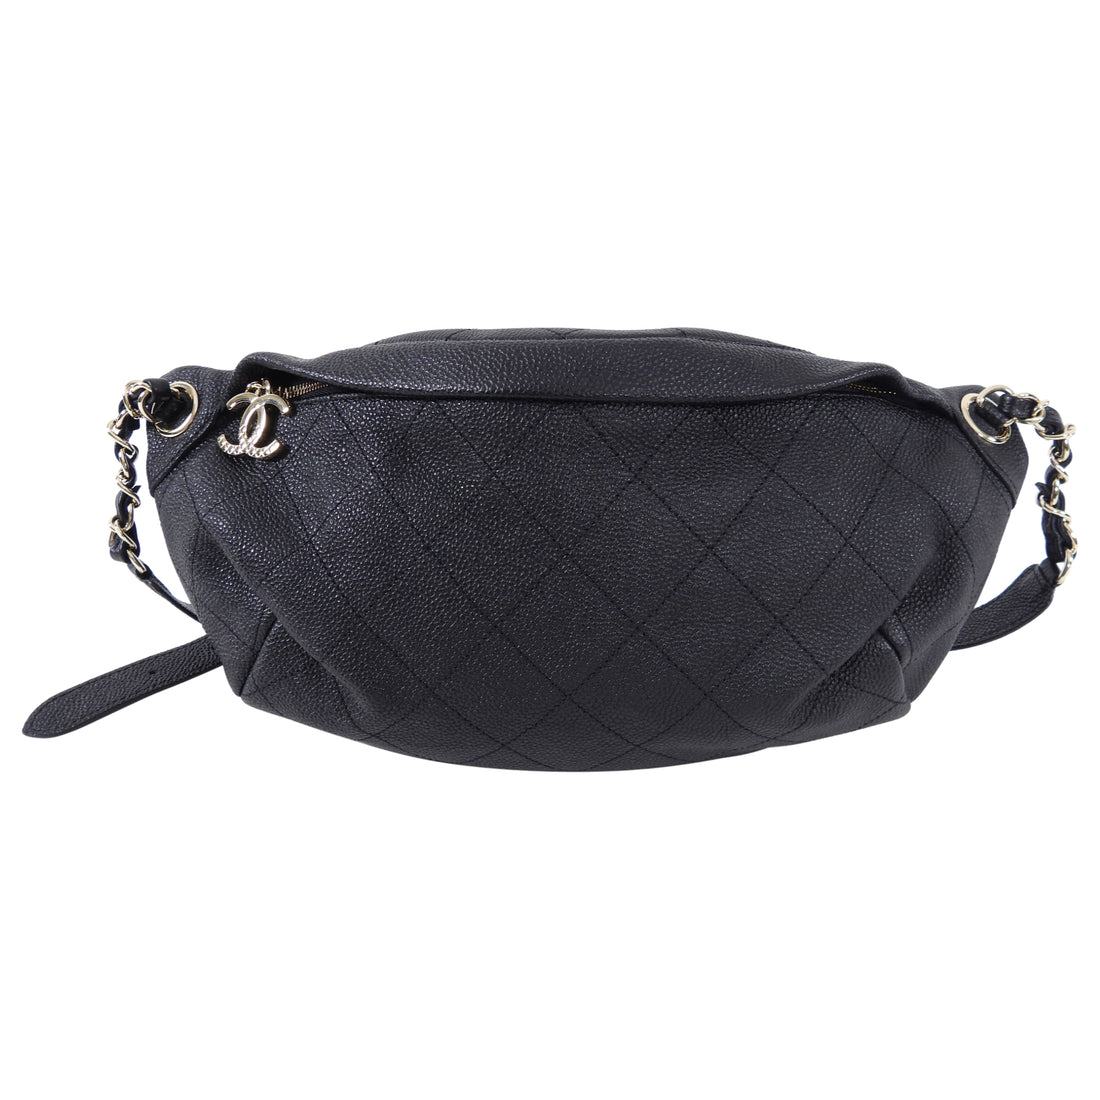 Chanel Black Caviar Stitched Banane Fanny Pack Belt Bag – I MISS